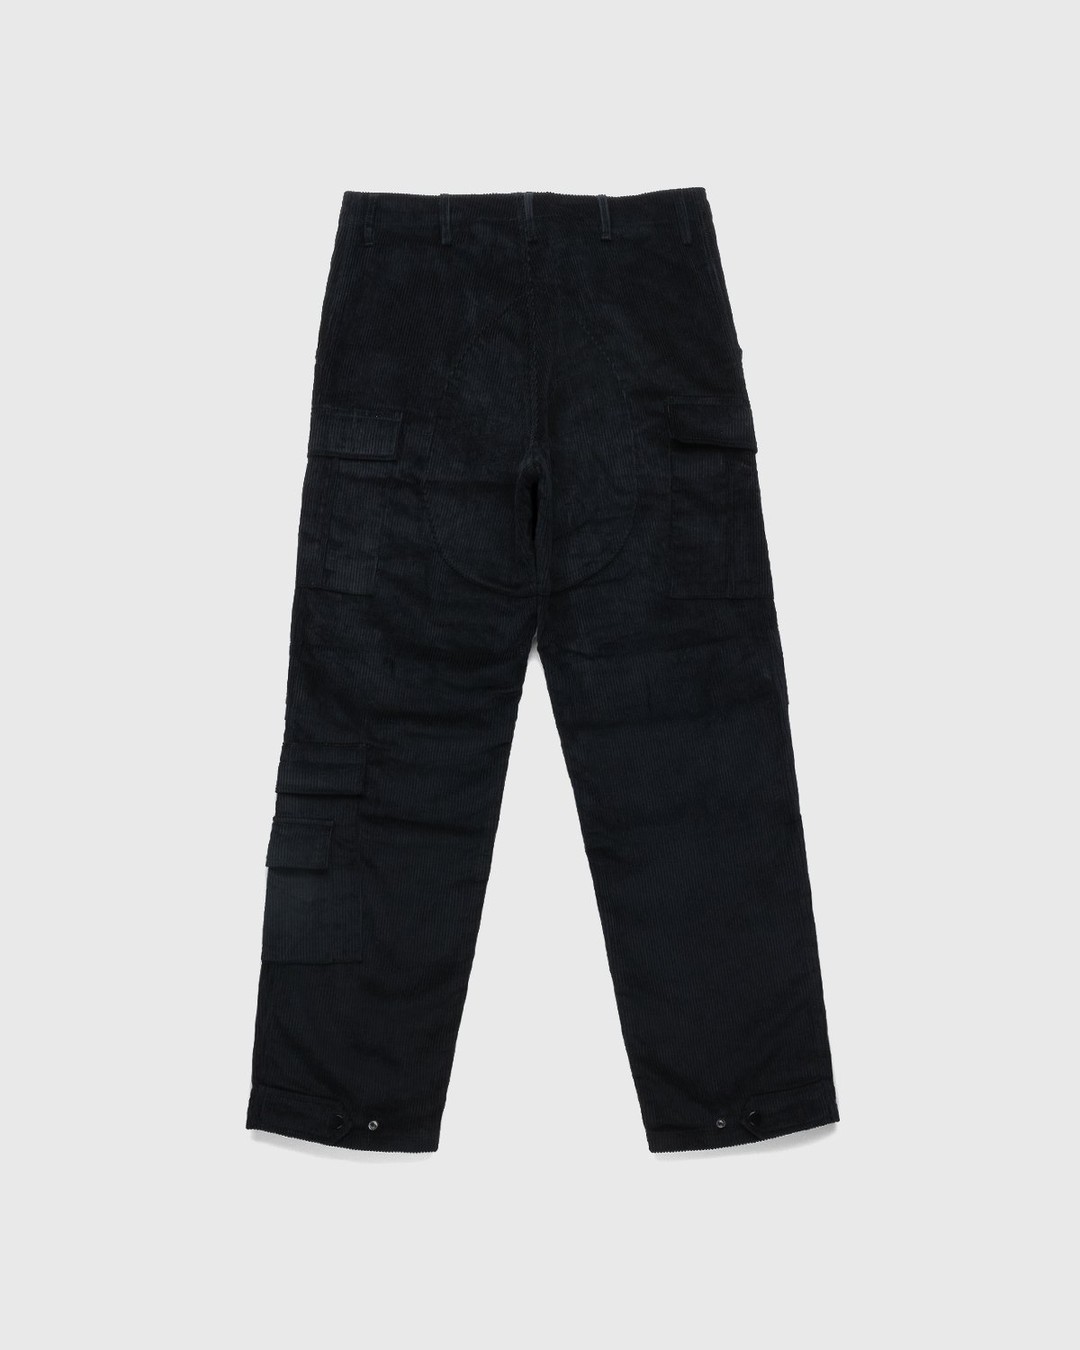 Winnie New York – Corduroy Cargo Black - Pants - Black - Image 2